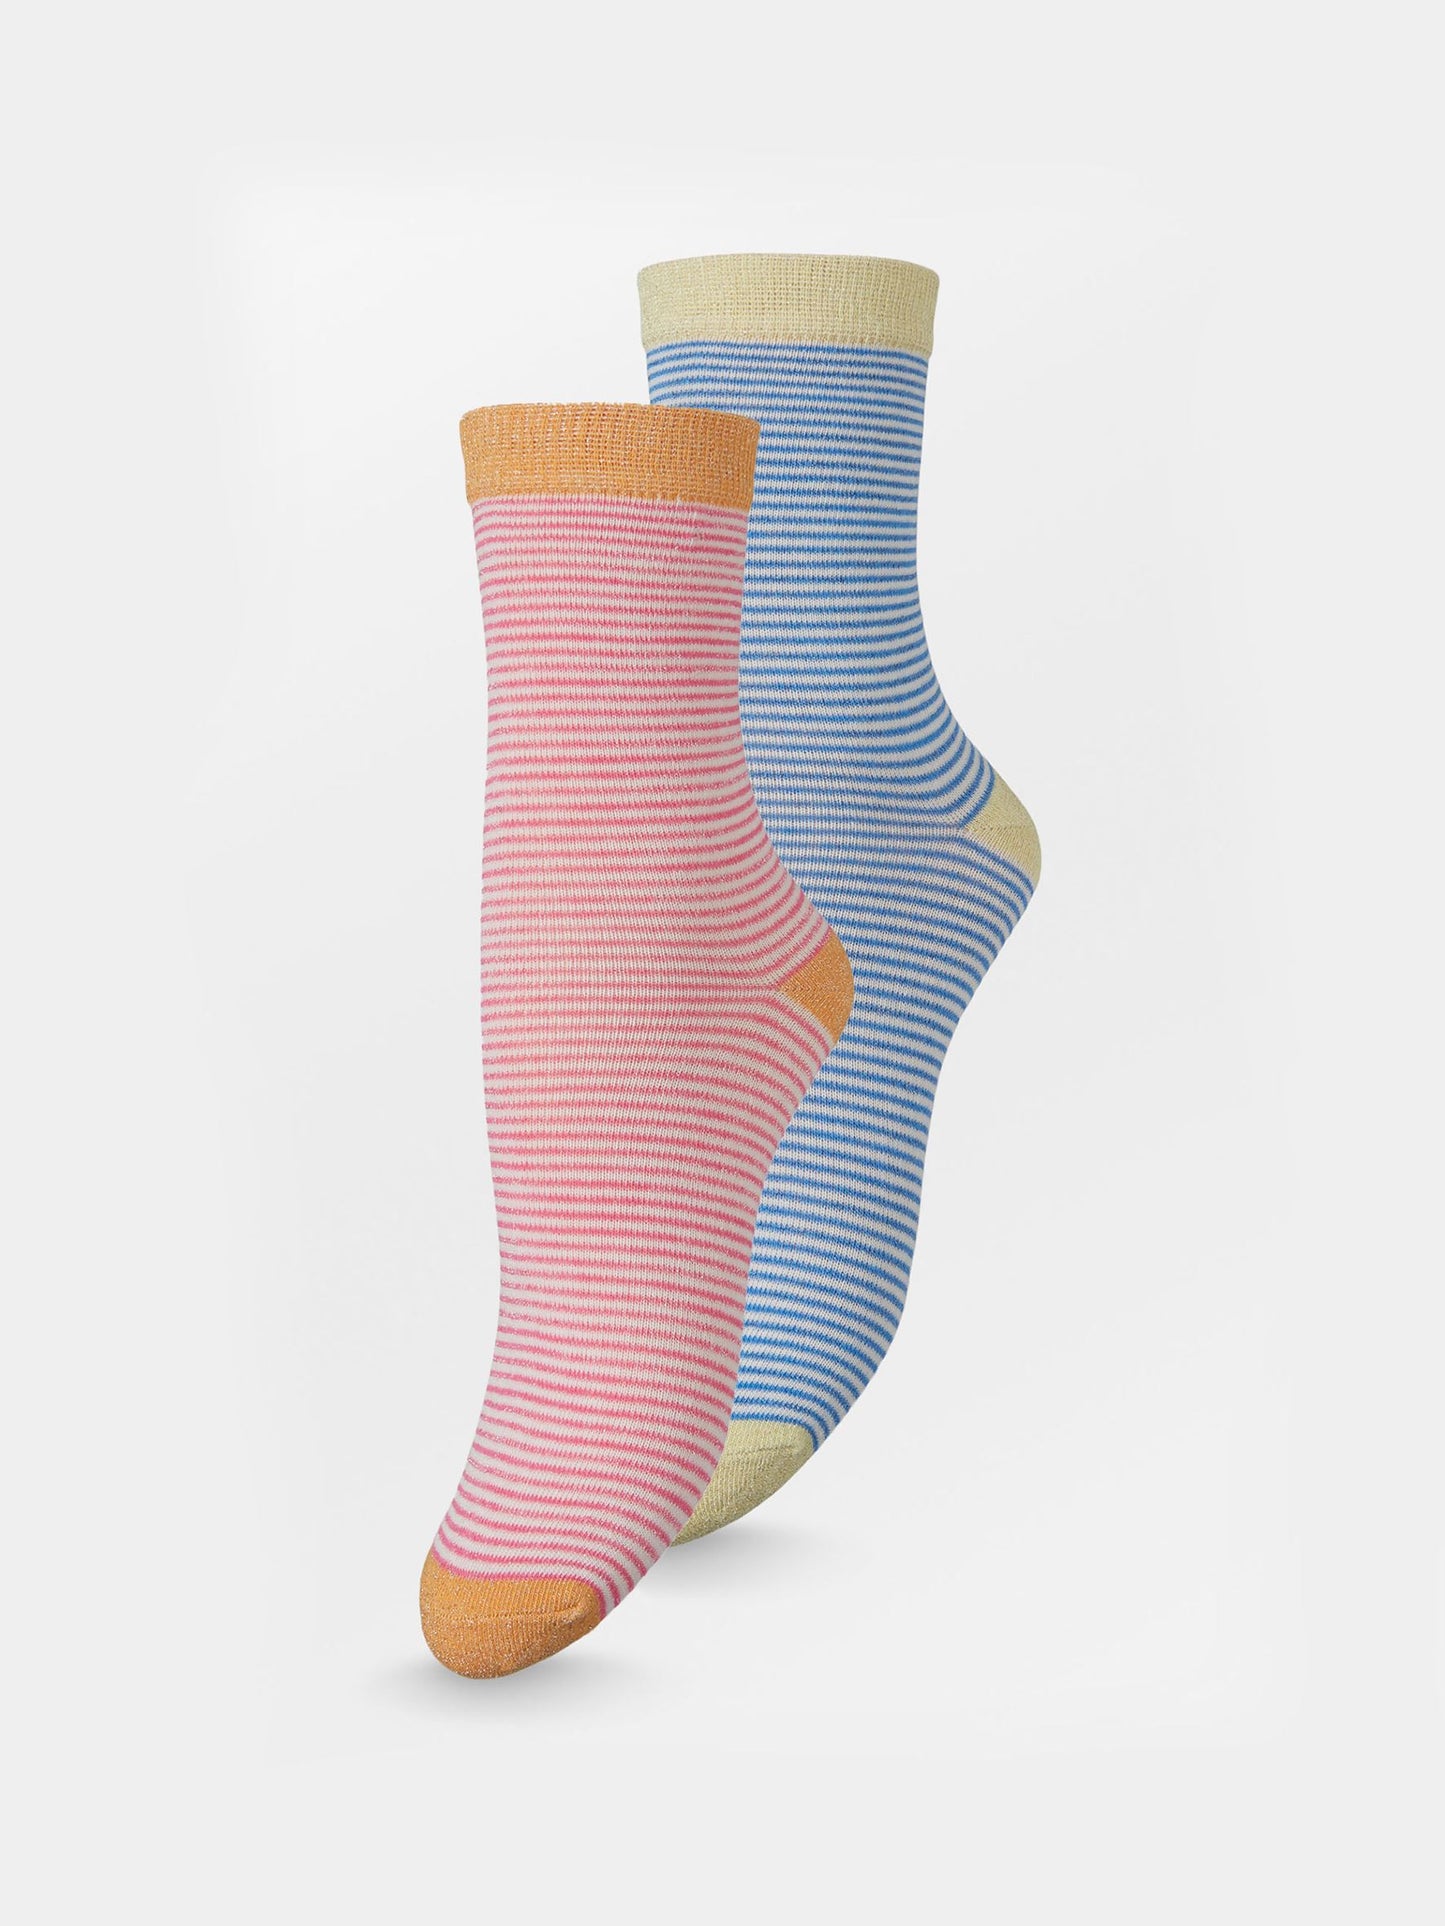 Becksöndergaard, Estella Stripa Sock 2 Pack - Pink/BoyBlue, archive, archive, sale, sale